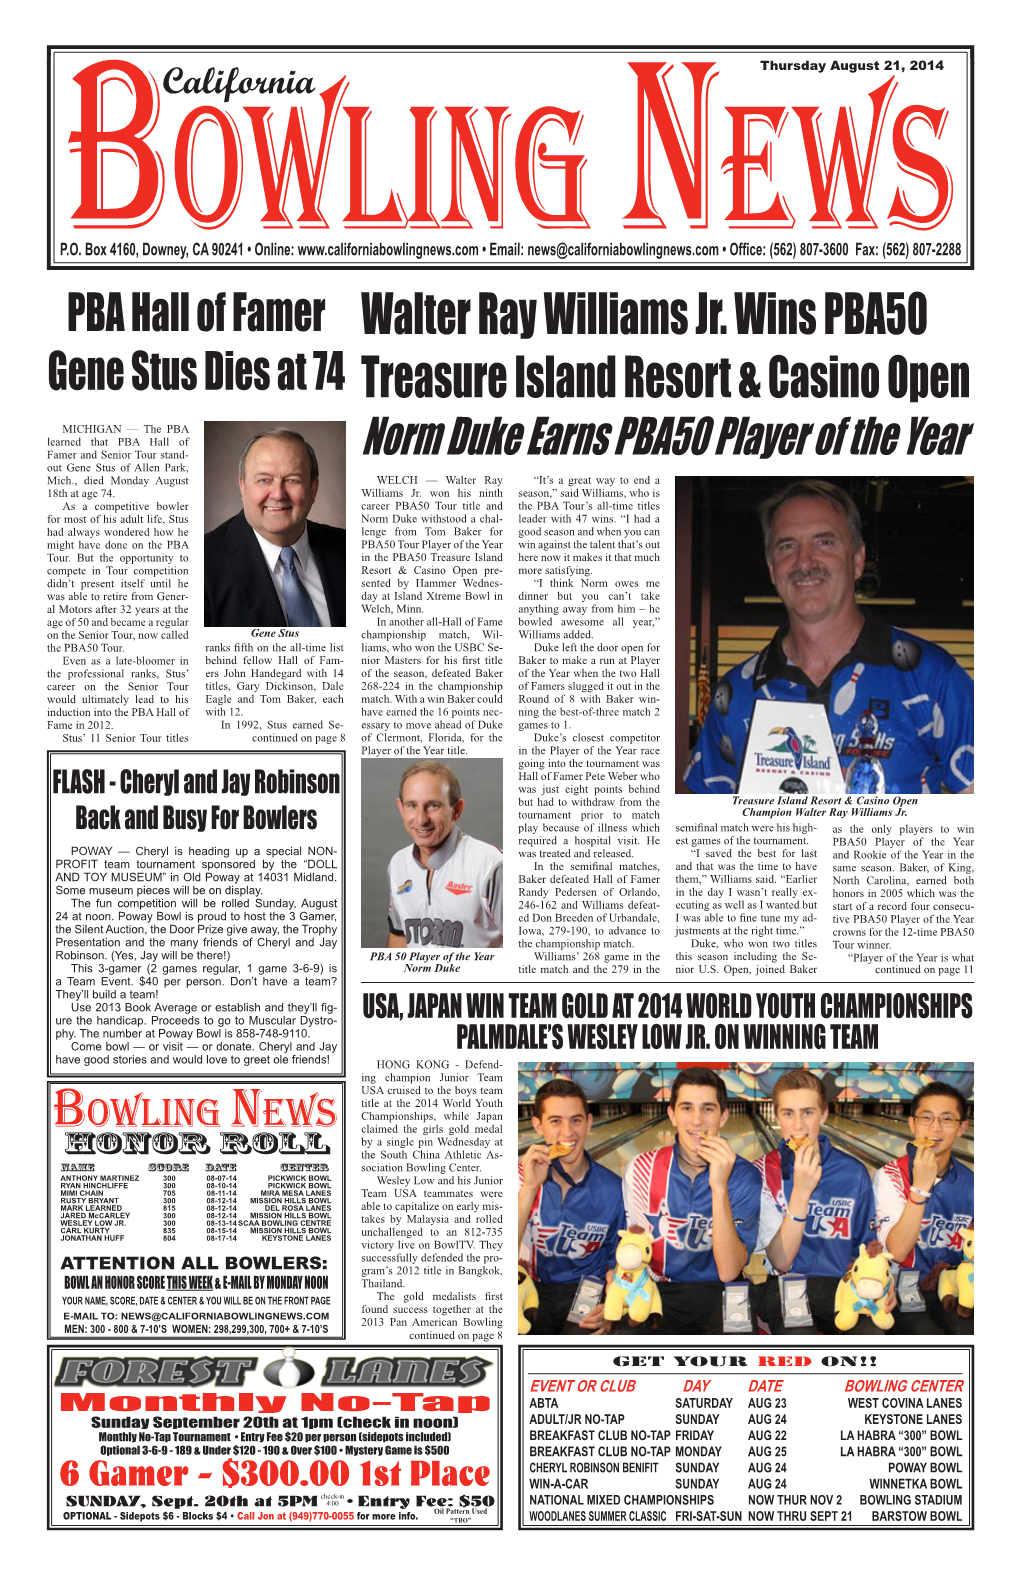 Walter Ray Williams Jr. Wins Pba50 Treasure Island Resort & Casino Open